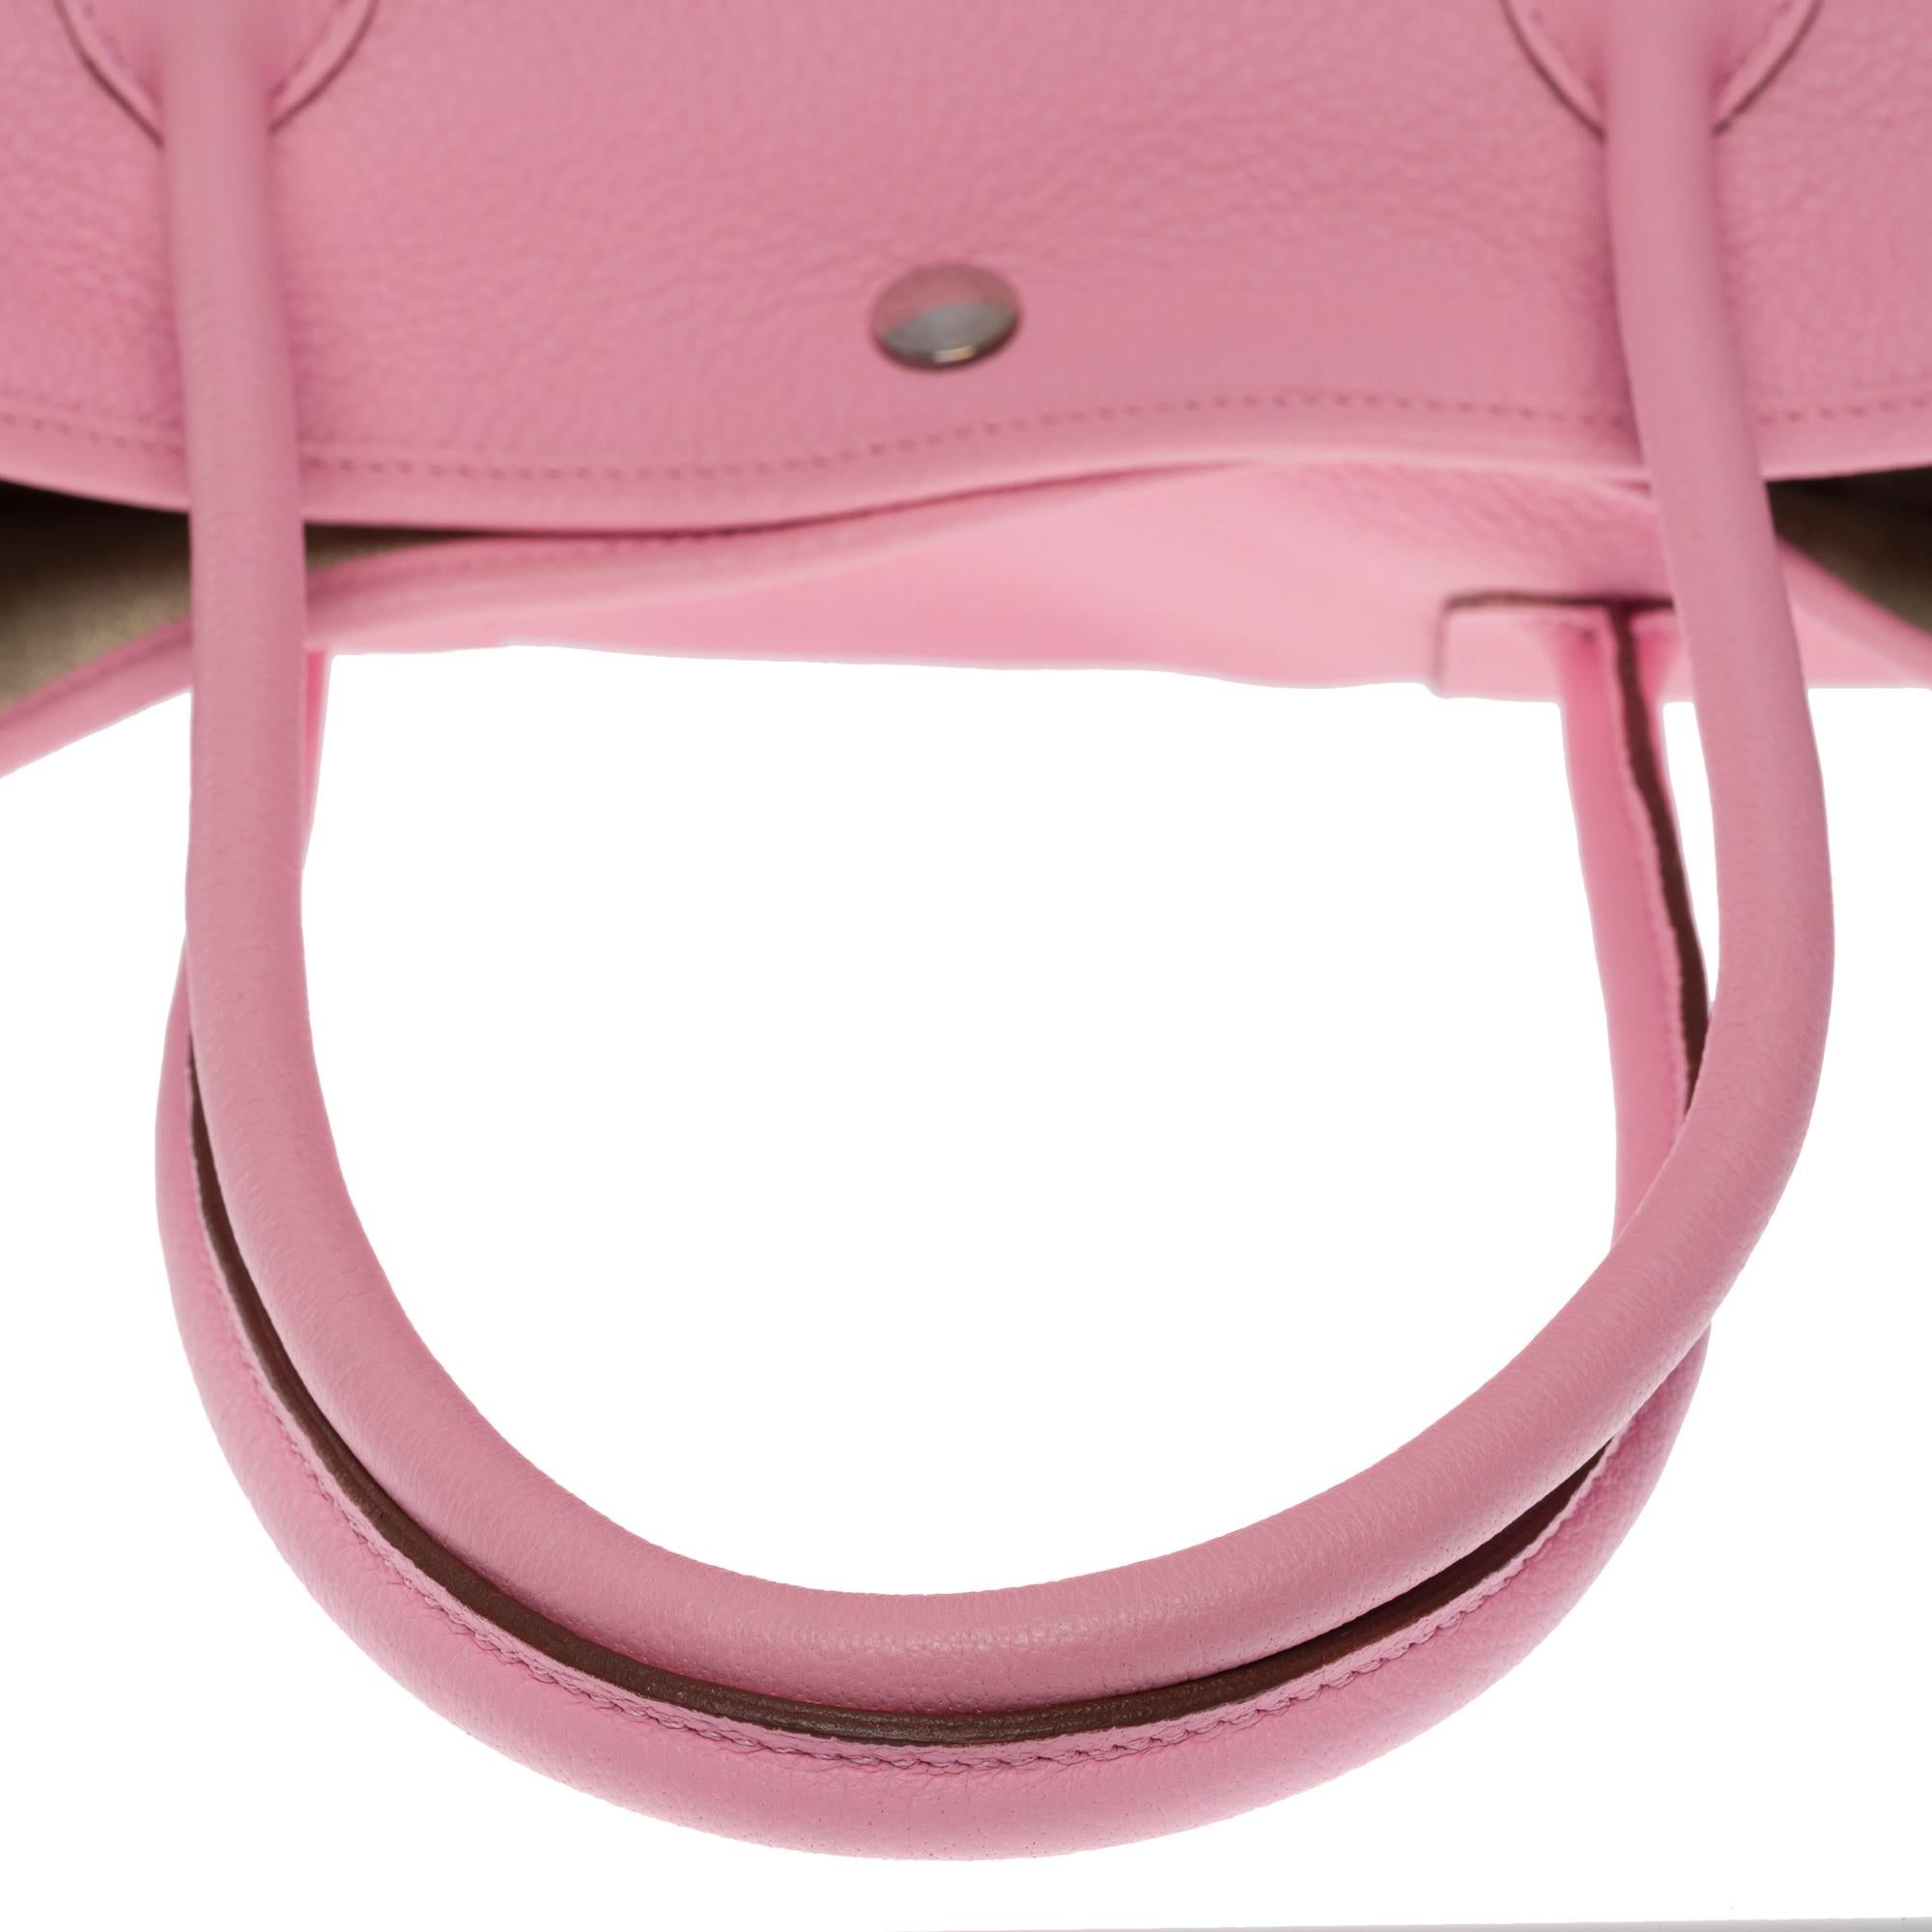 Gorgeous Hermès Garden Party 36 Tote bag in Sakura Pink Negonda leather, SHW 4